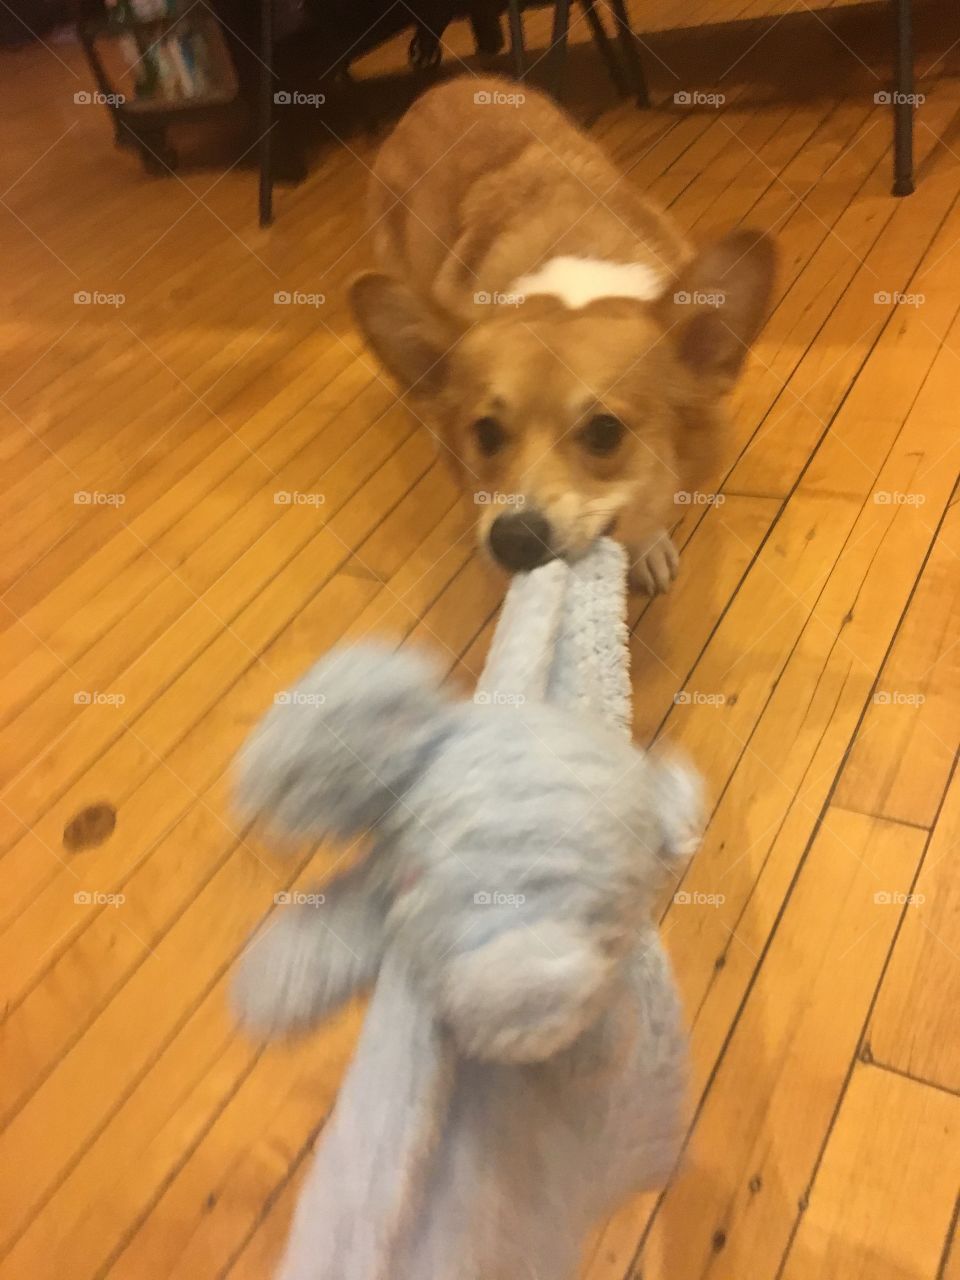 Corgi playing funny puppy dog